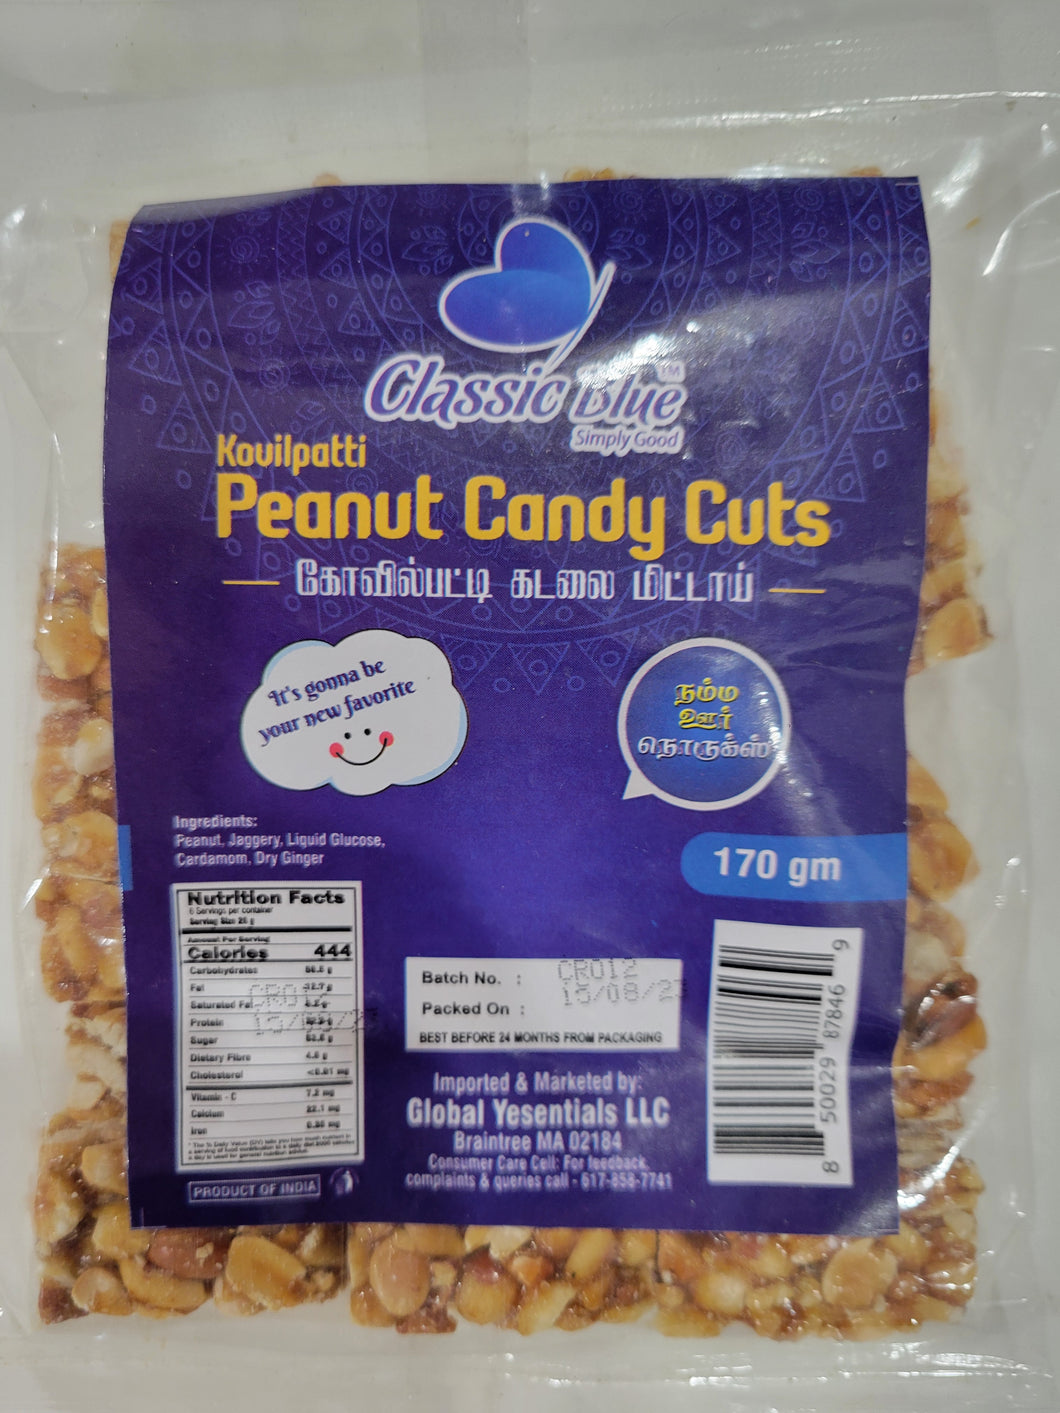 Peanut Candy Cuts